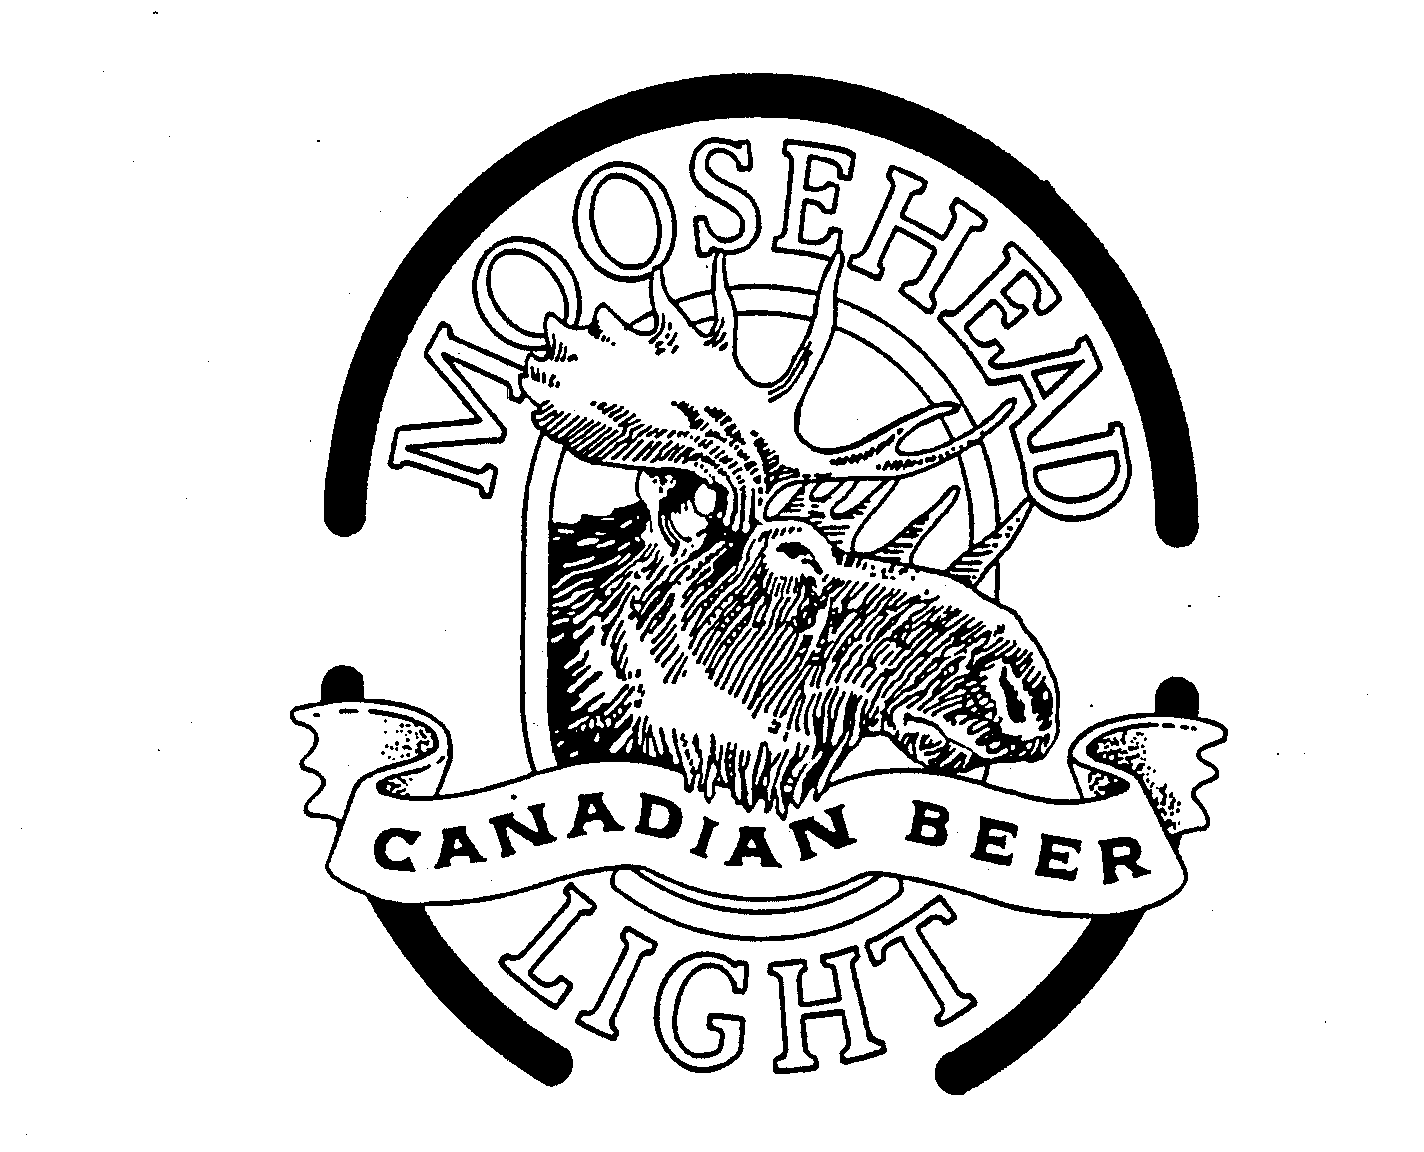  MOOSEHEAD LIGHT CANADIAN BEER